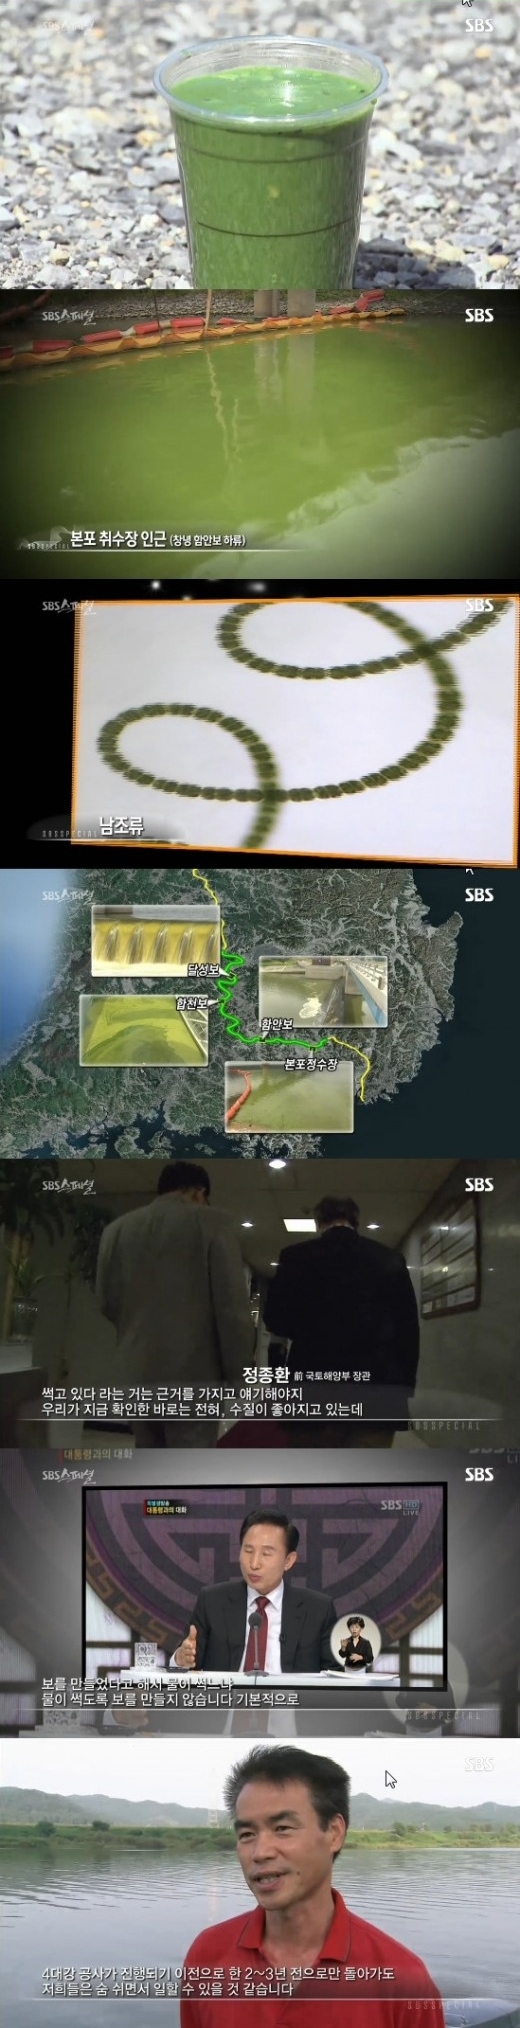 SBS 스페셜 ‘4대강의 반격’ 방송화면